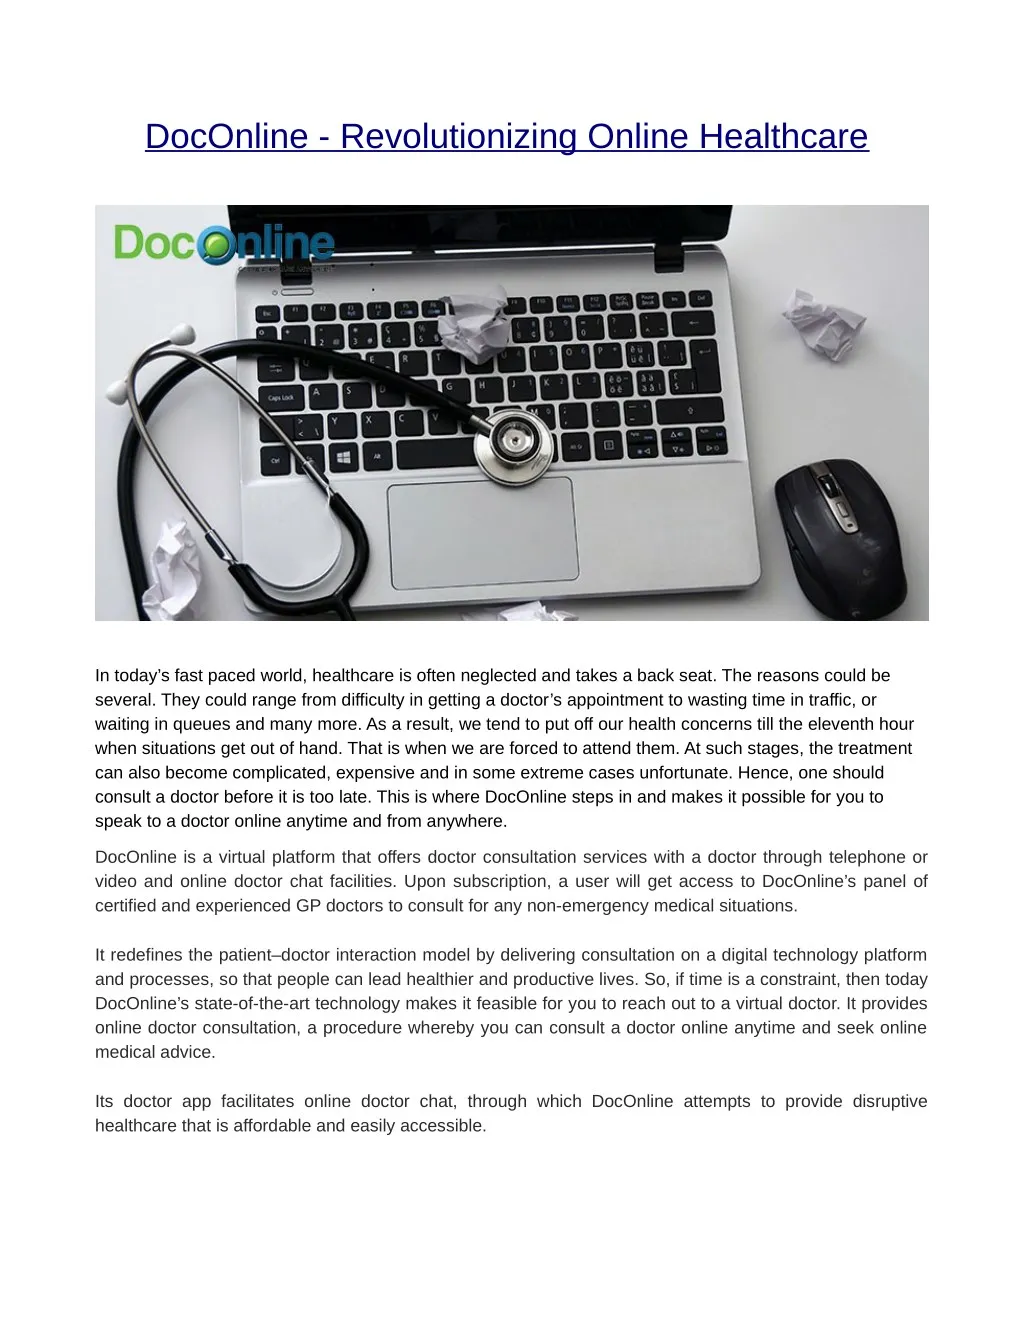 doconline revolutionizing online healthcare